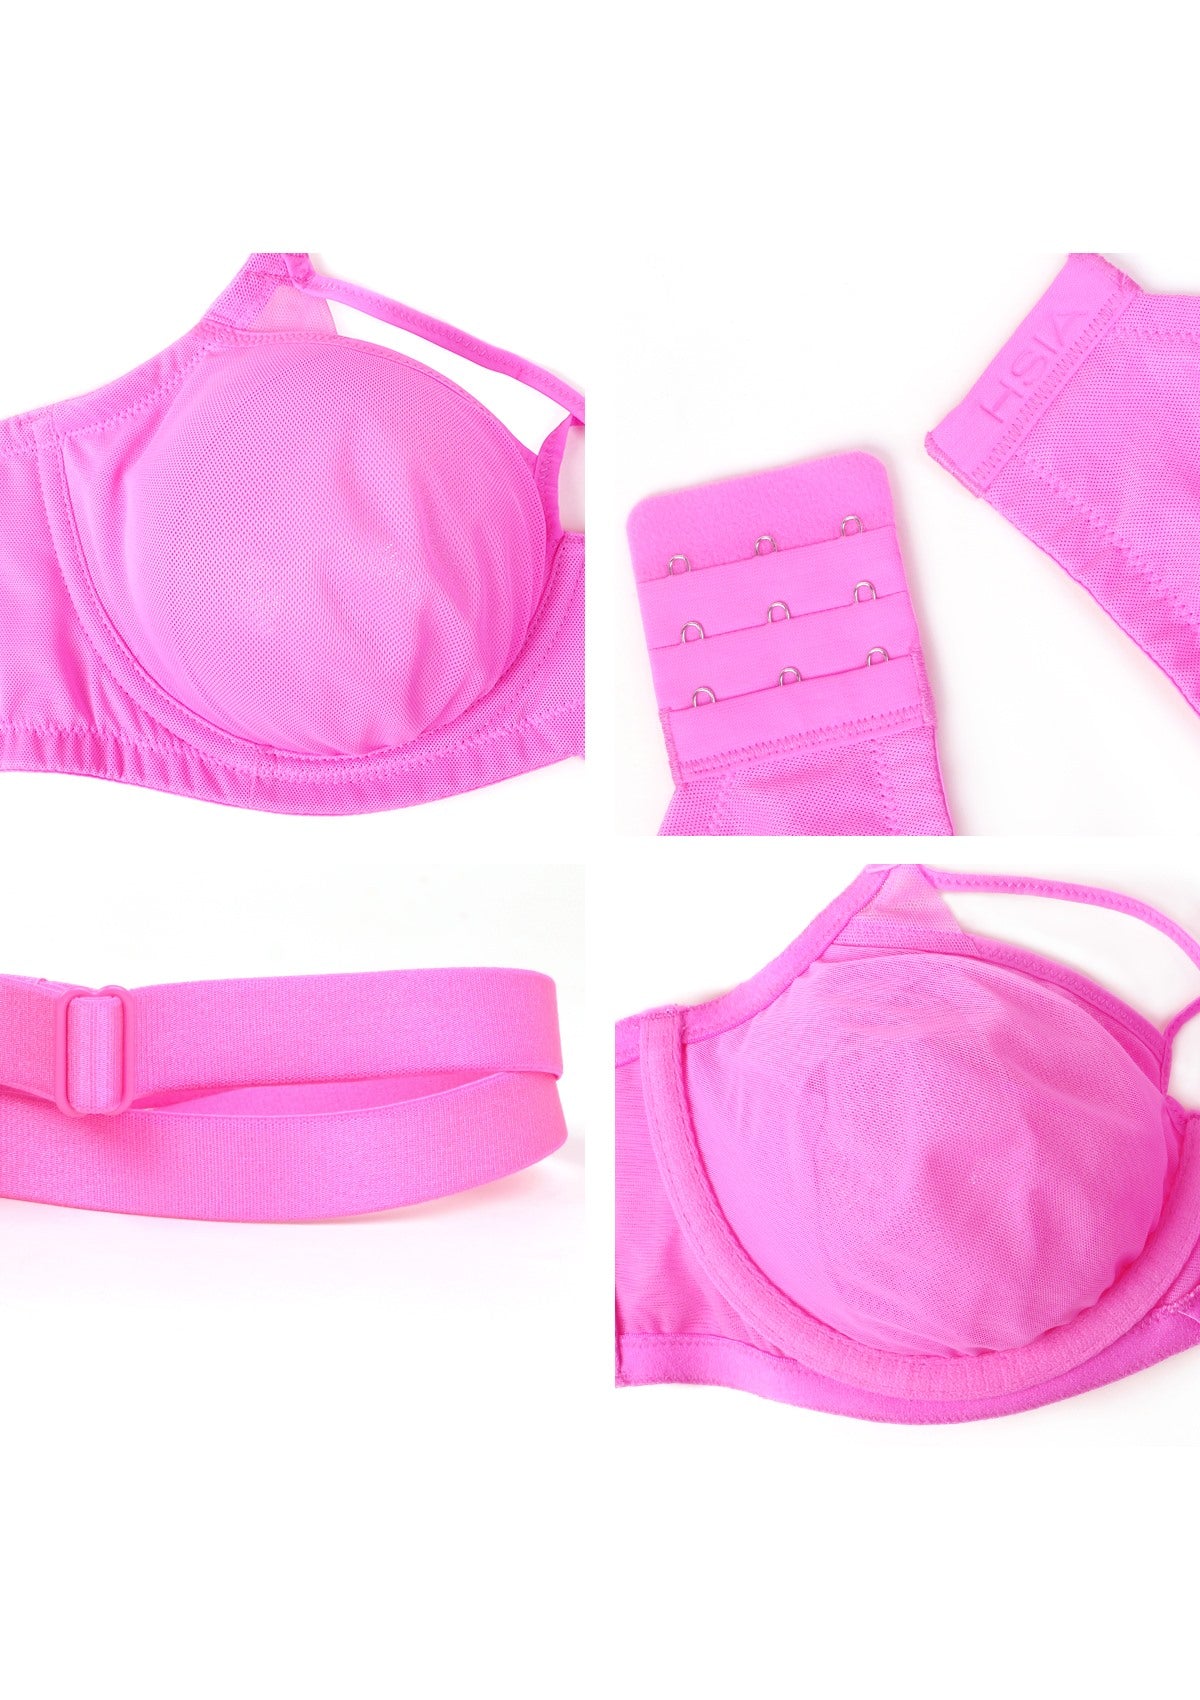 HSIA Billie Cross Front Strap Smooth Sheer Mesh Comfy Underwire Bra - Barbie Pink / 34 / H